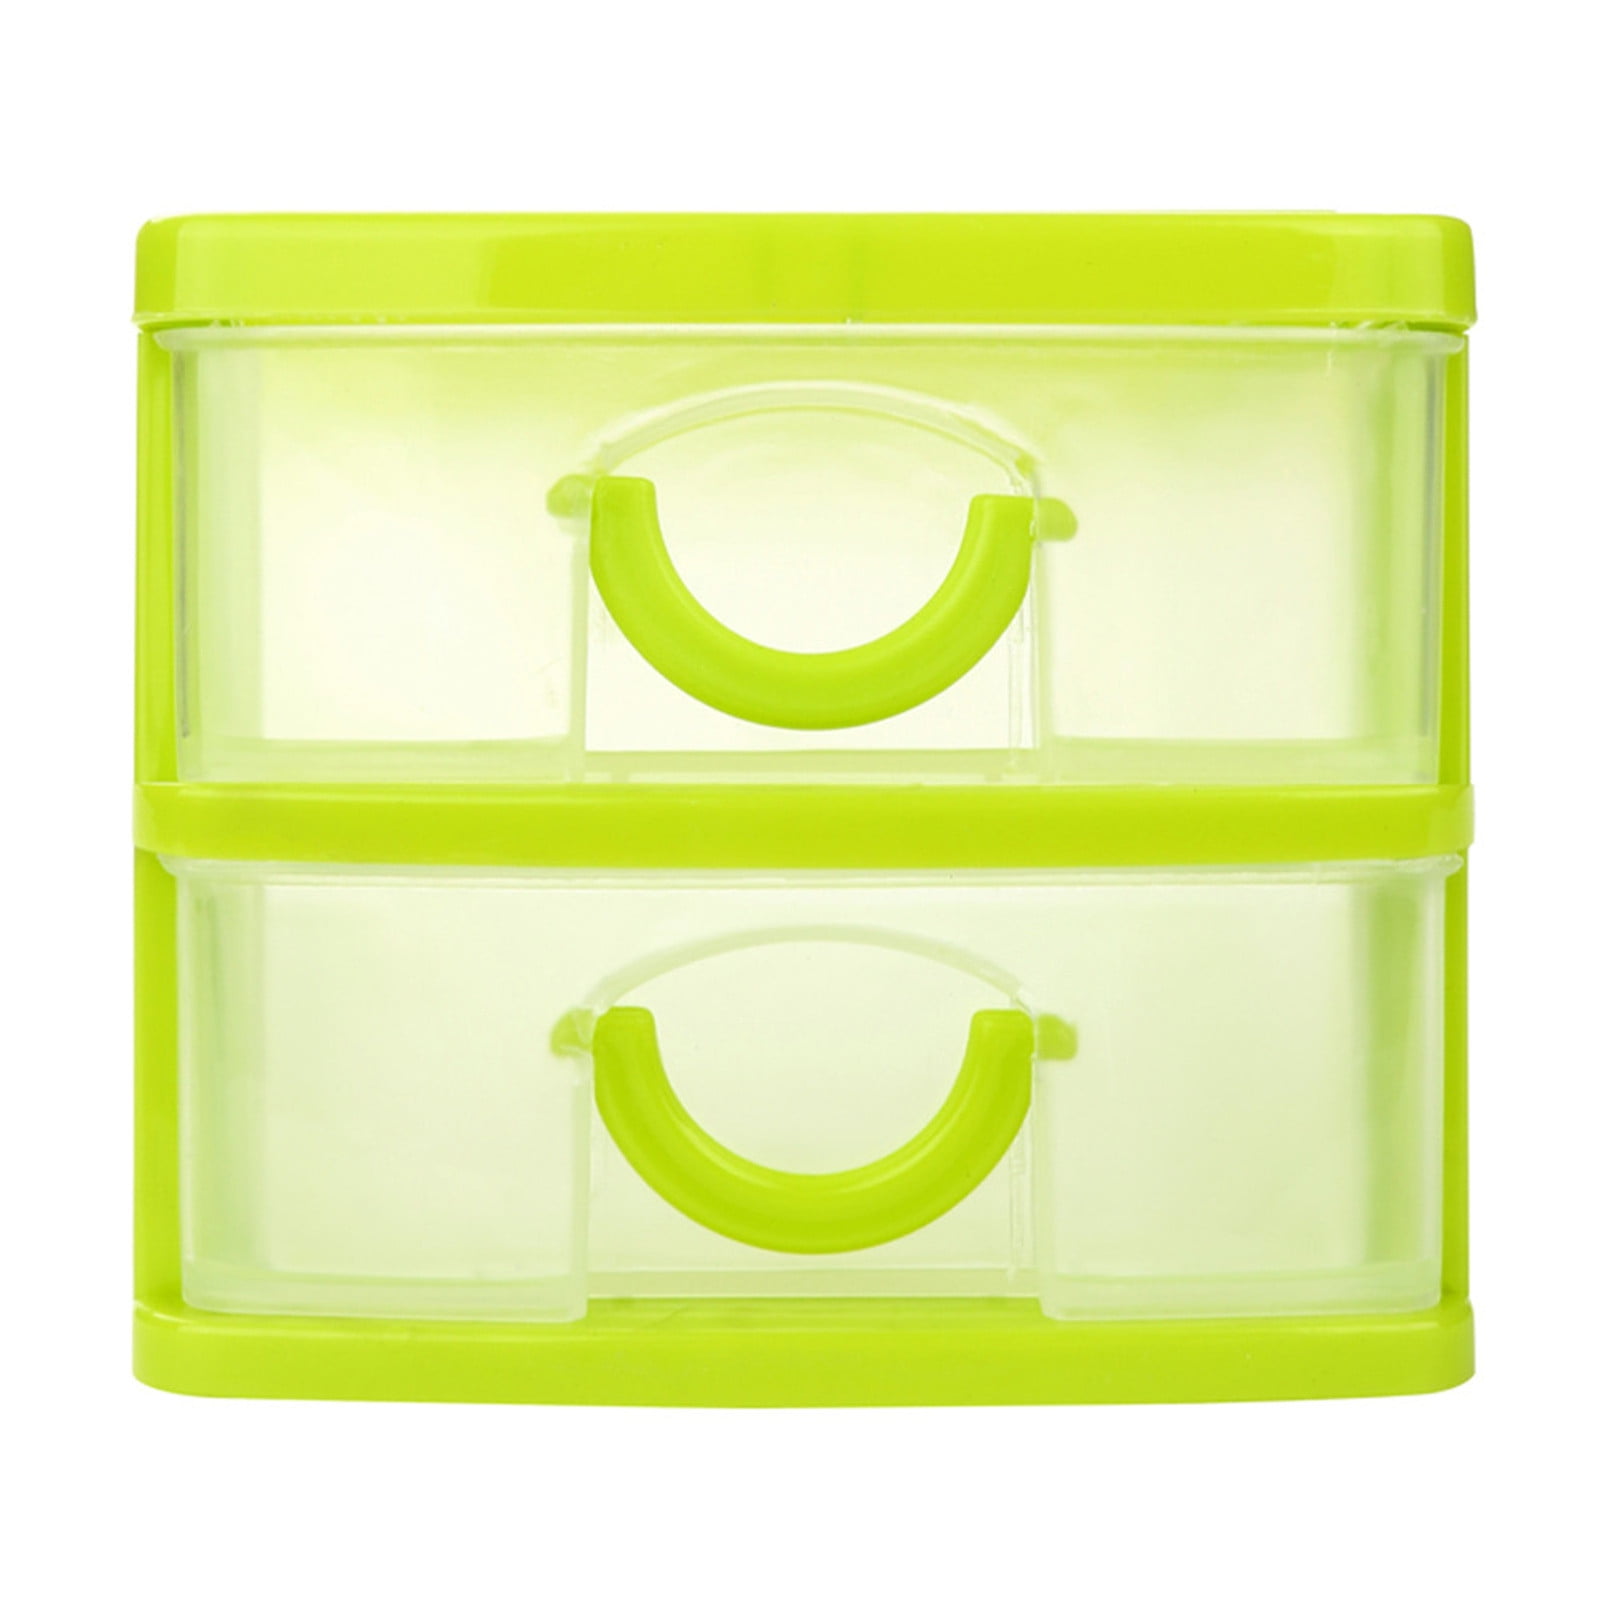 Moocorvic Small Capacity Organizer Box Plastic Storage Drawers